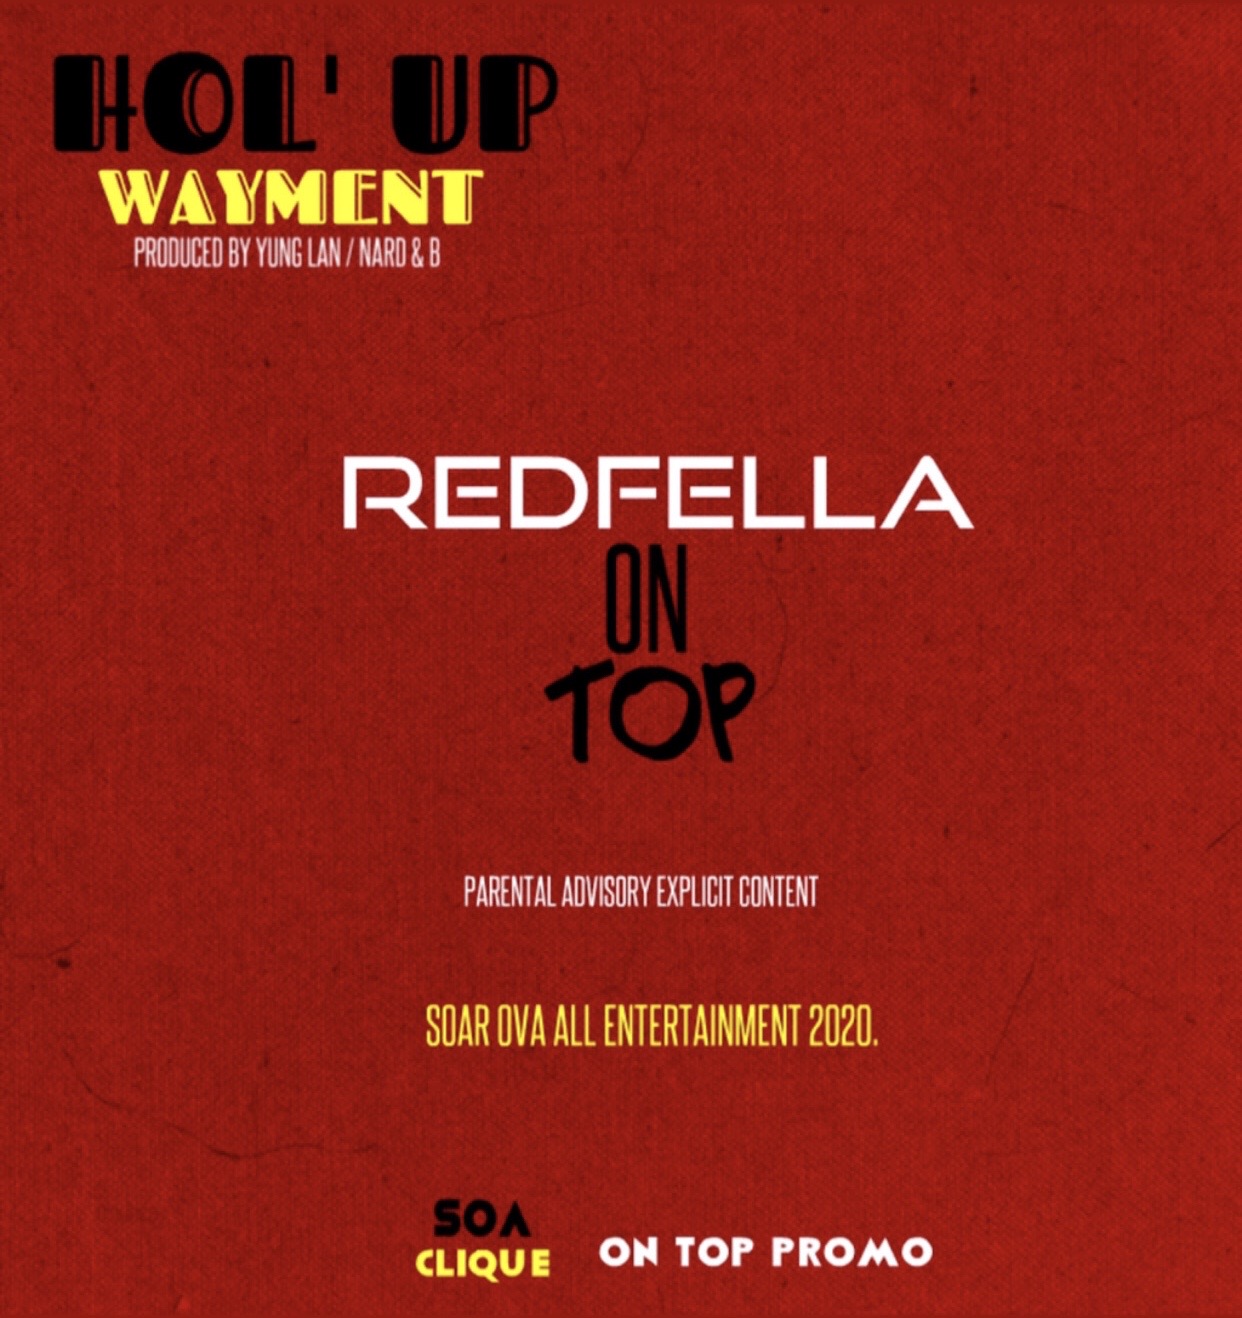 [Single] RedFellaOnTop – Hol’up Wayment [Prod Nard & B / Yung Lan]